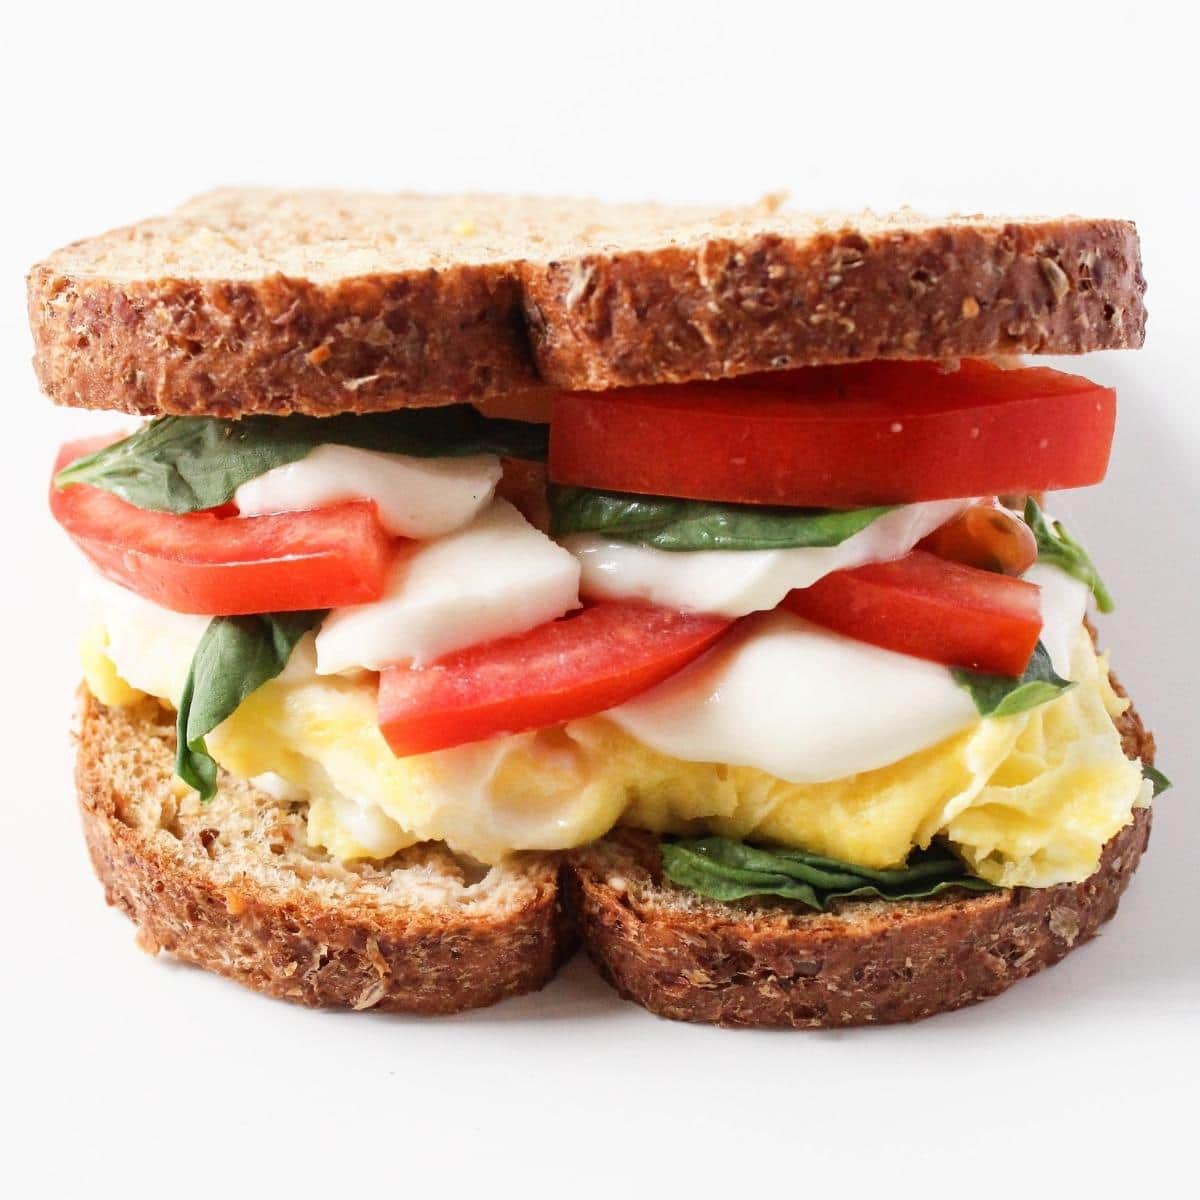 https://www.fannetasticfood.com/wp-content/uploads/2022/11/Caprese-Scrambled-Egg-Sandwich-Featured-Image.jpg